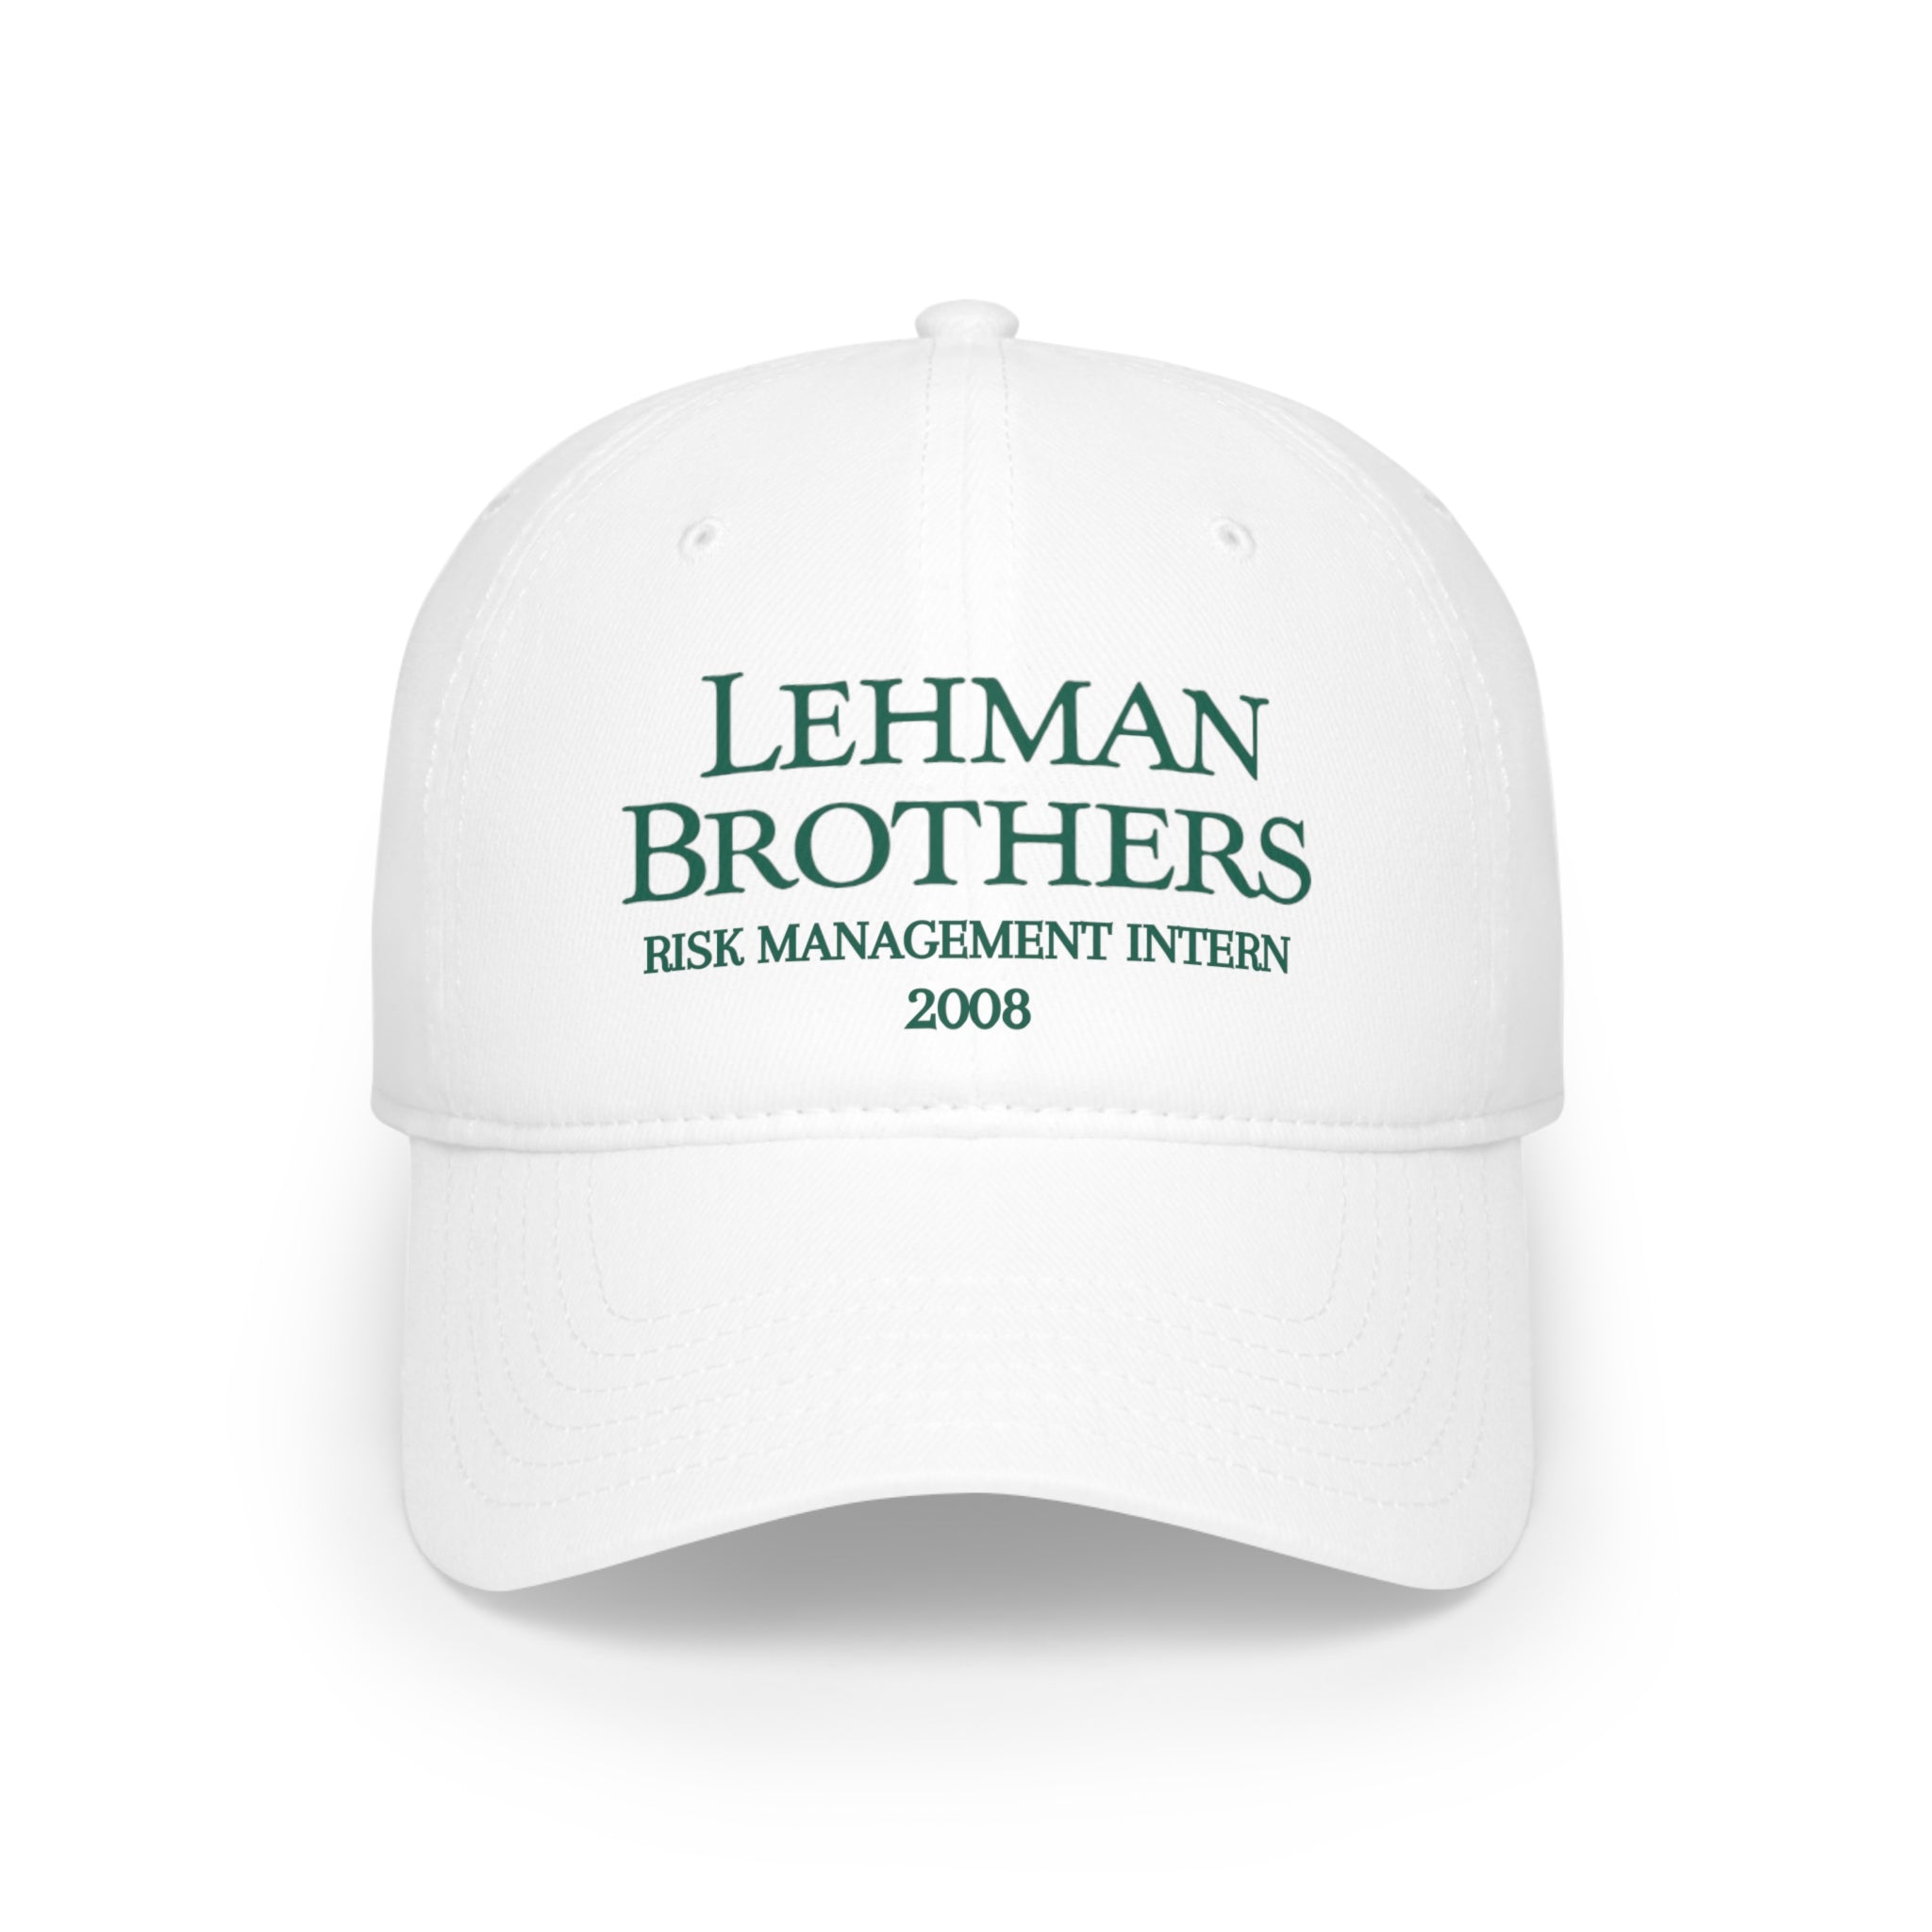 Lehman Brothers Risk Management Intern 2008 - Hat